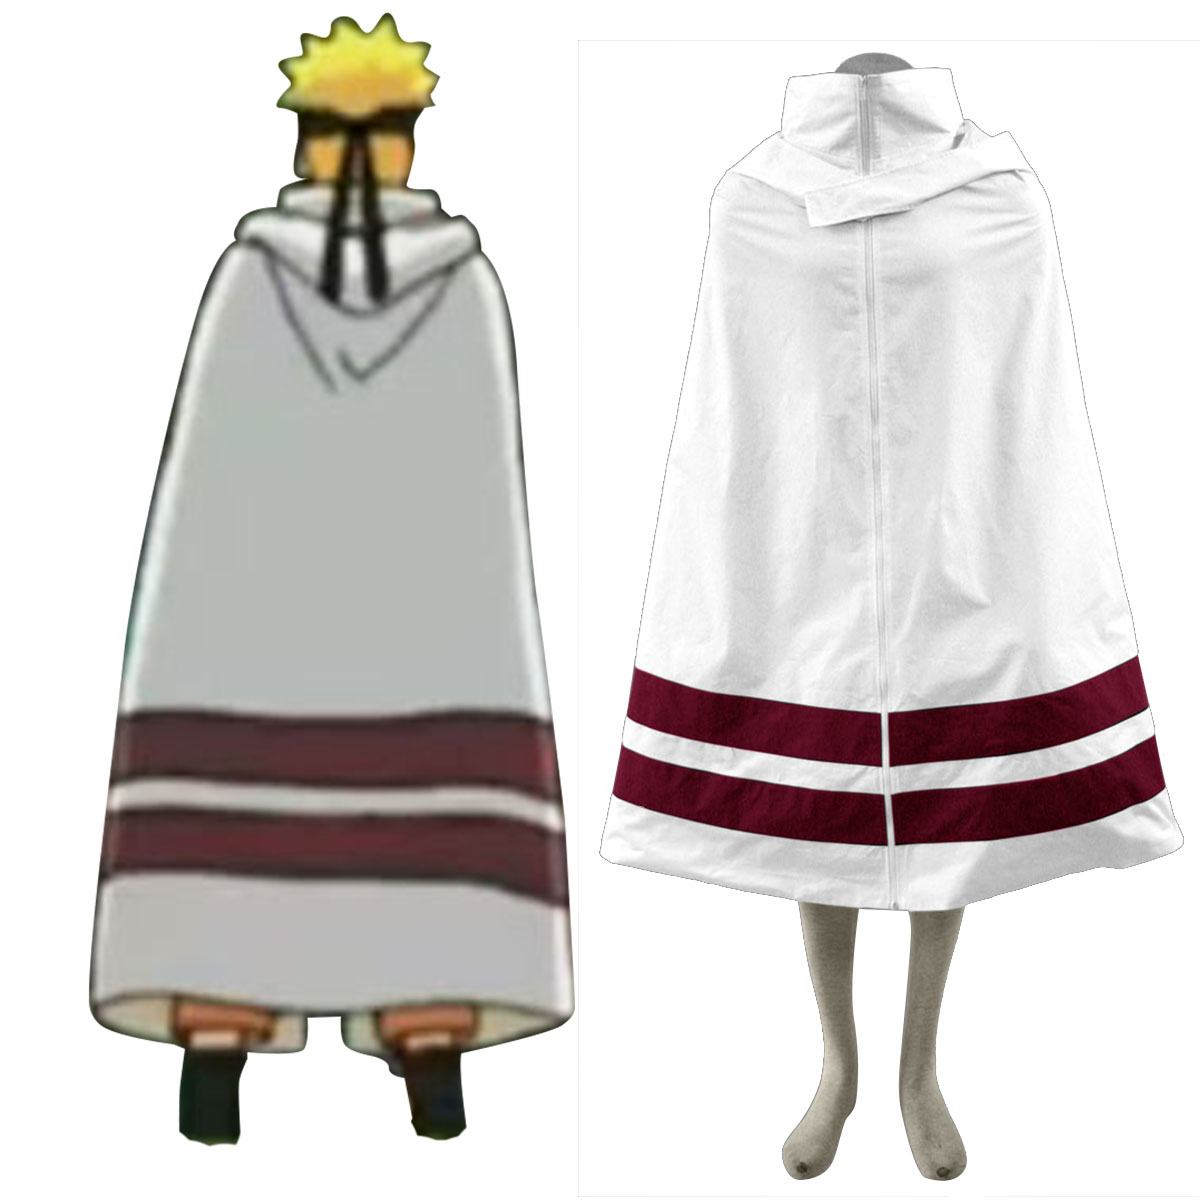 Naruto Shippuden Konoha Cloak 1 Anime Cosplay Costumes Outfit